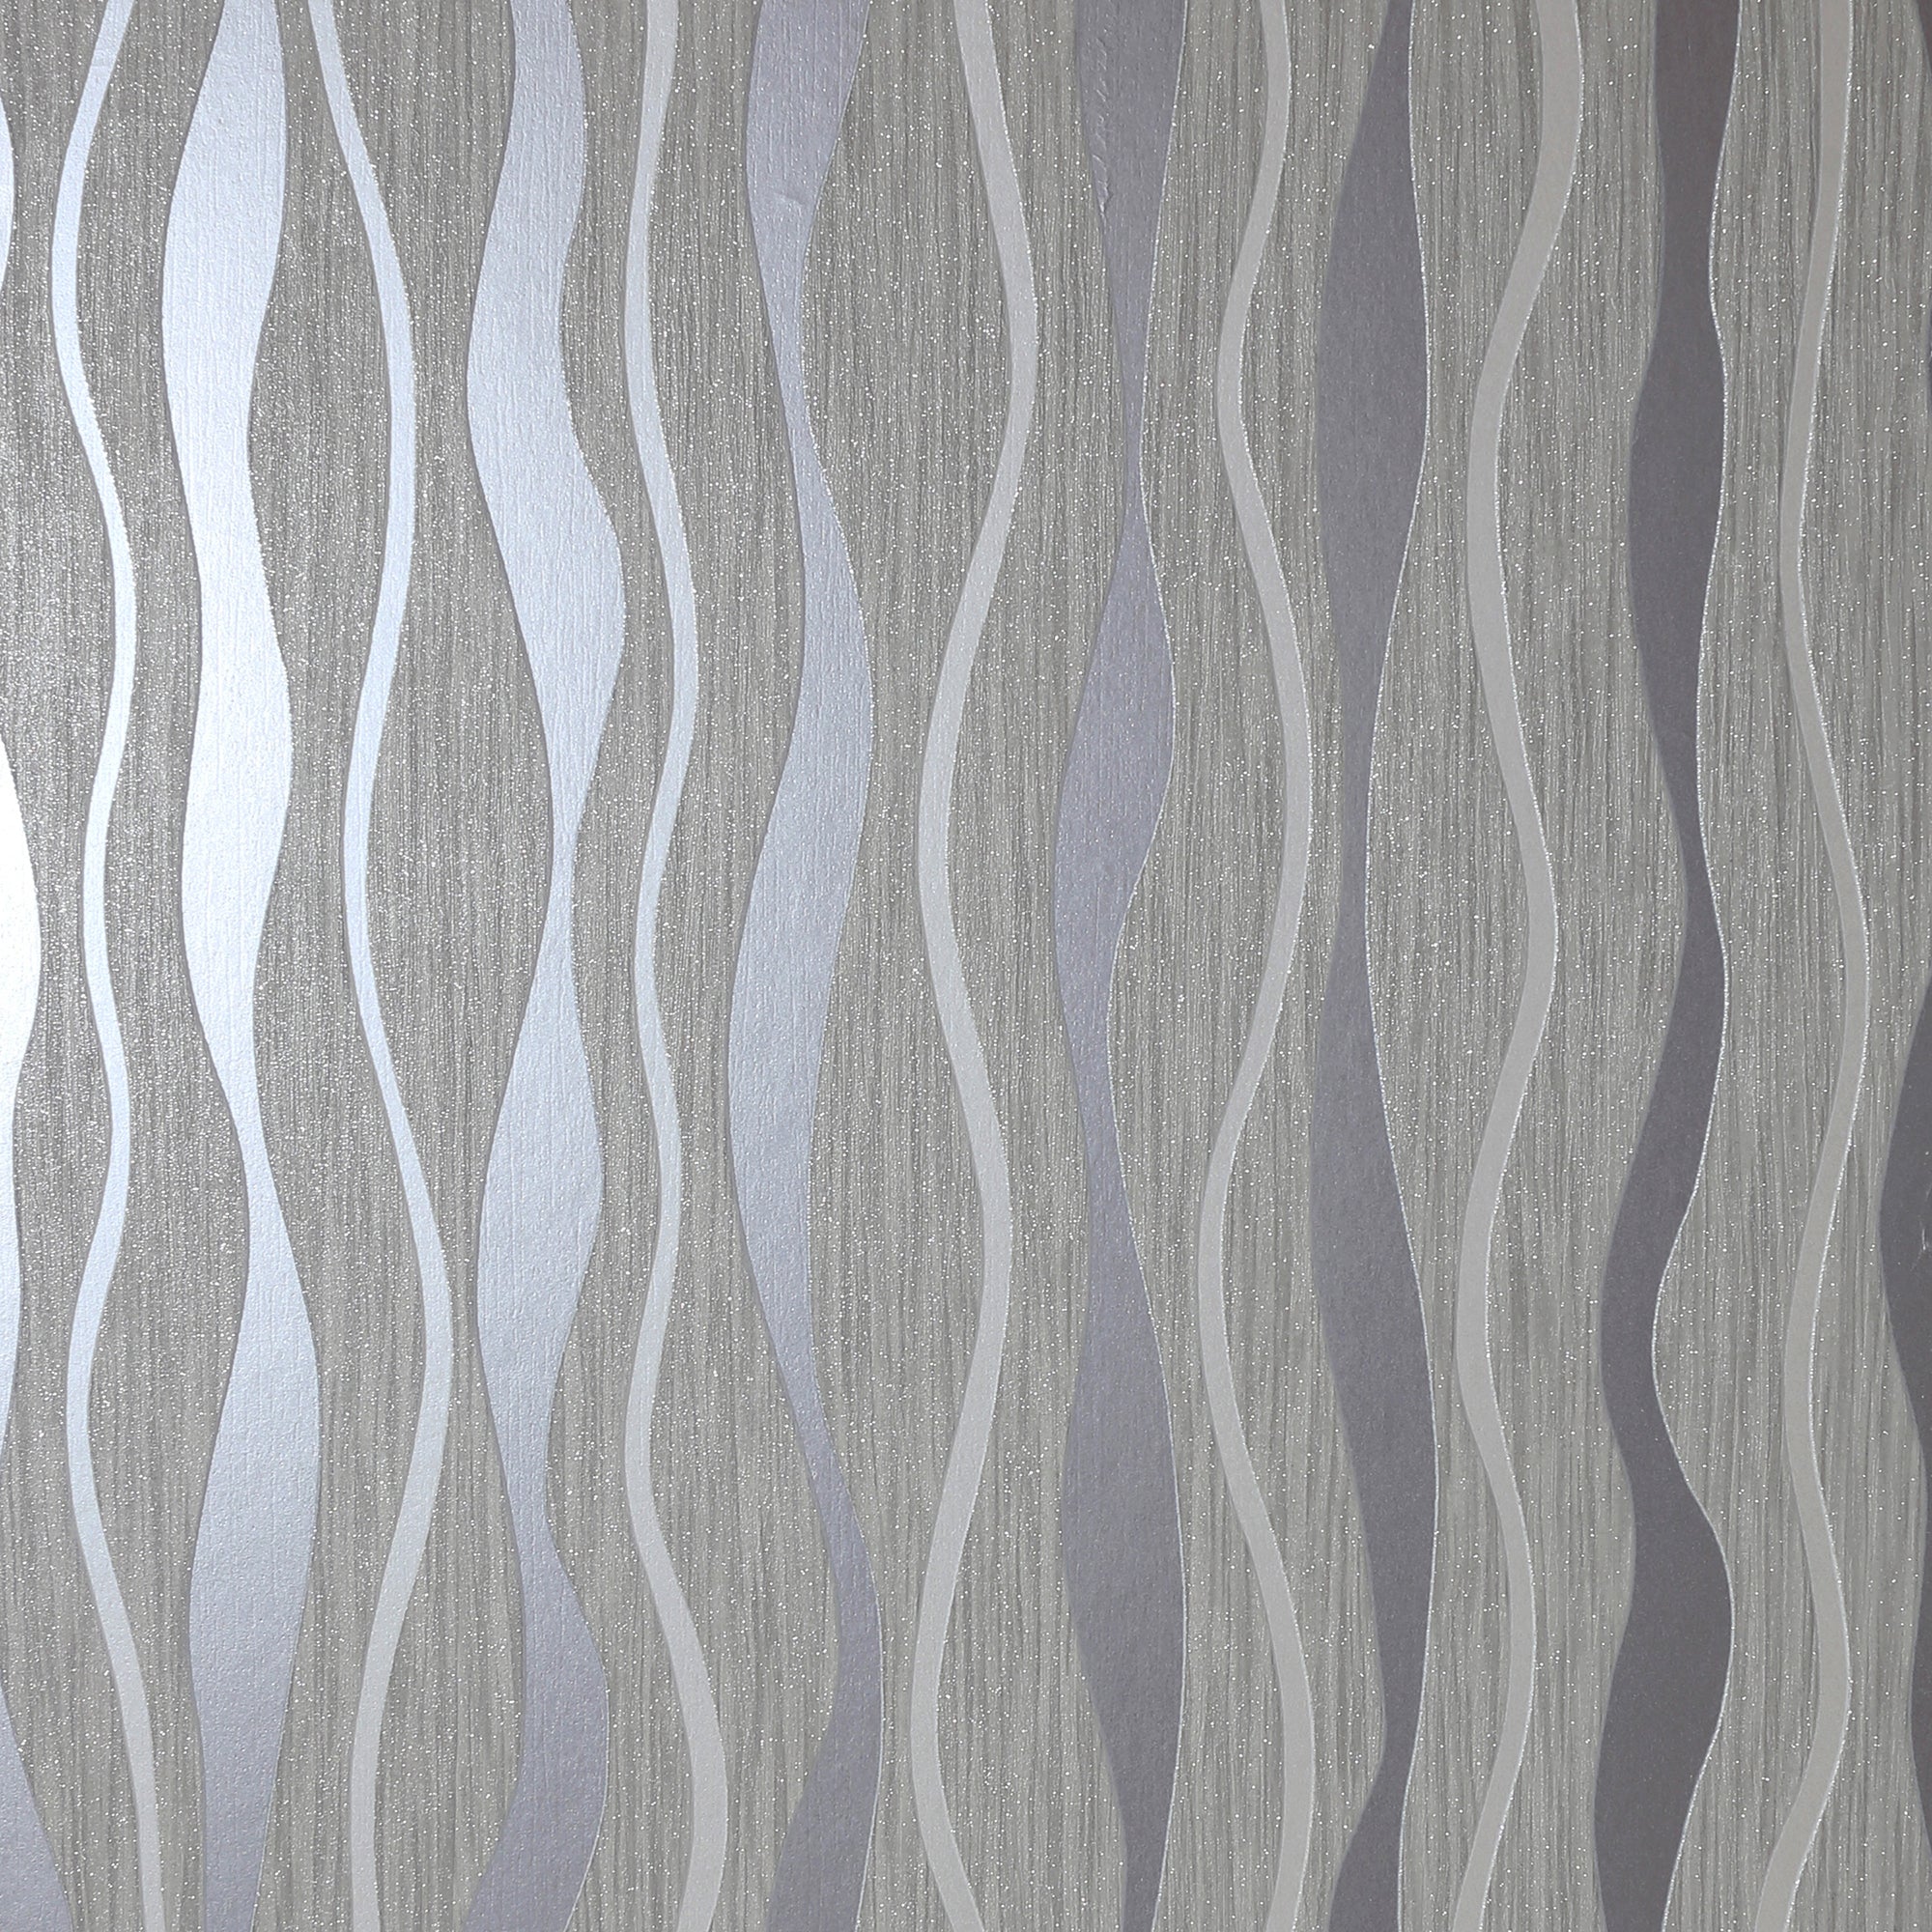 Metallic Wave Wallpaper 292801 by Arthouse